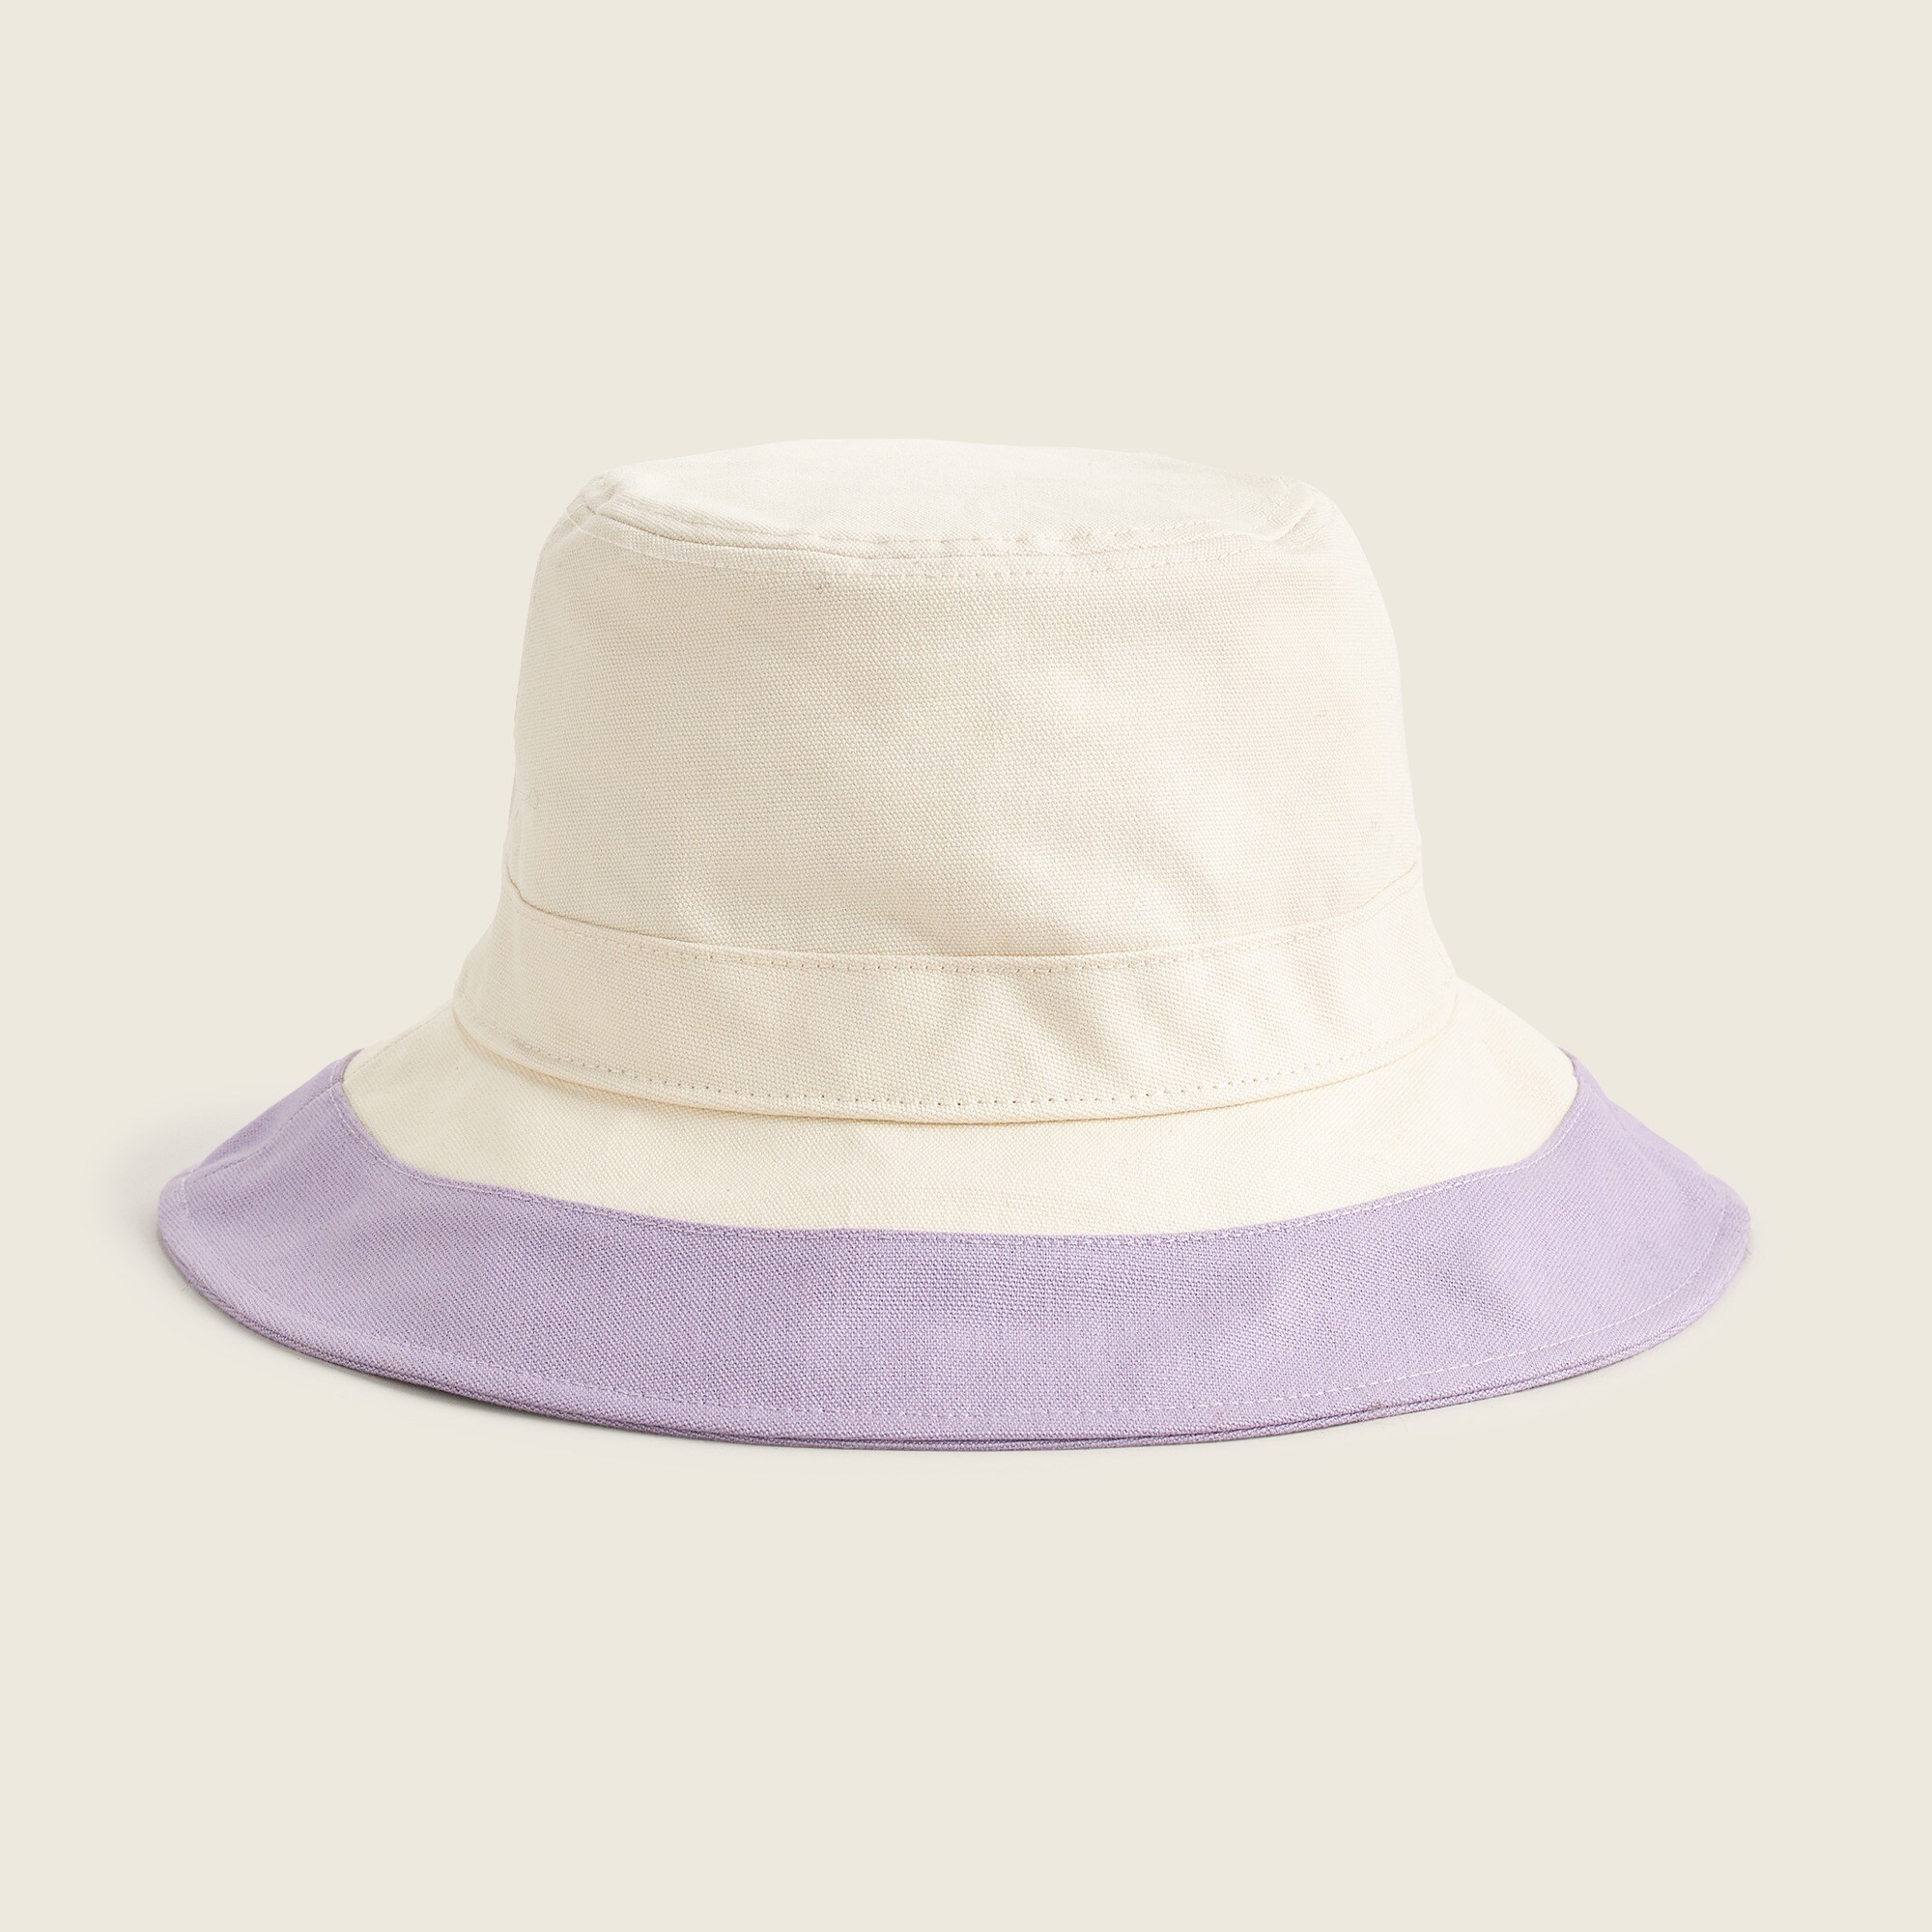  Wide-brim bucket hat in colorblock